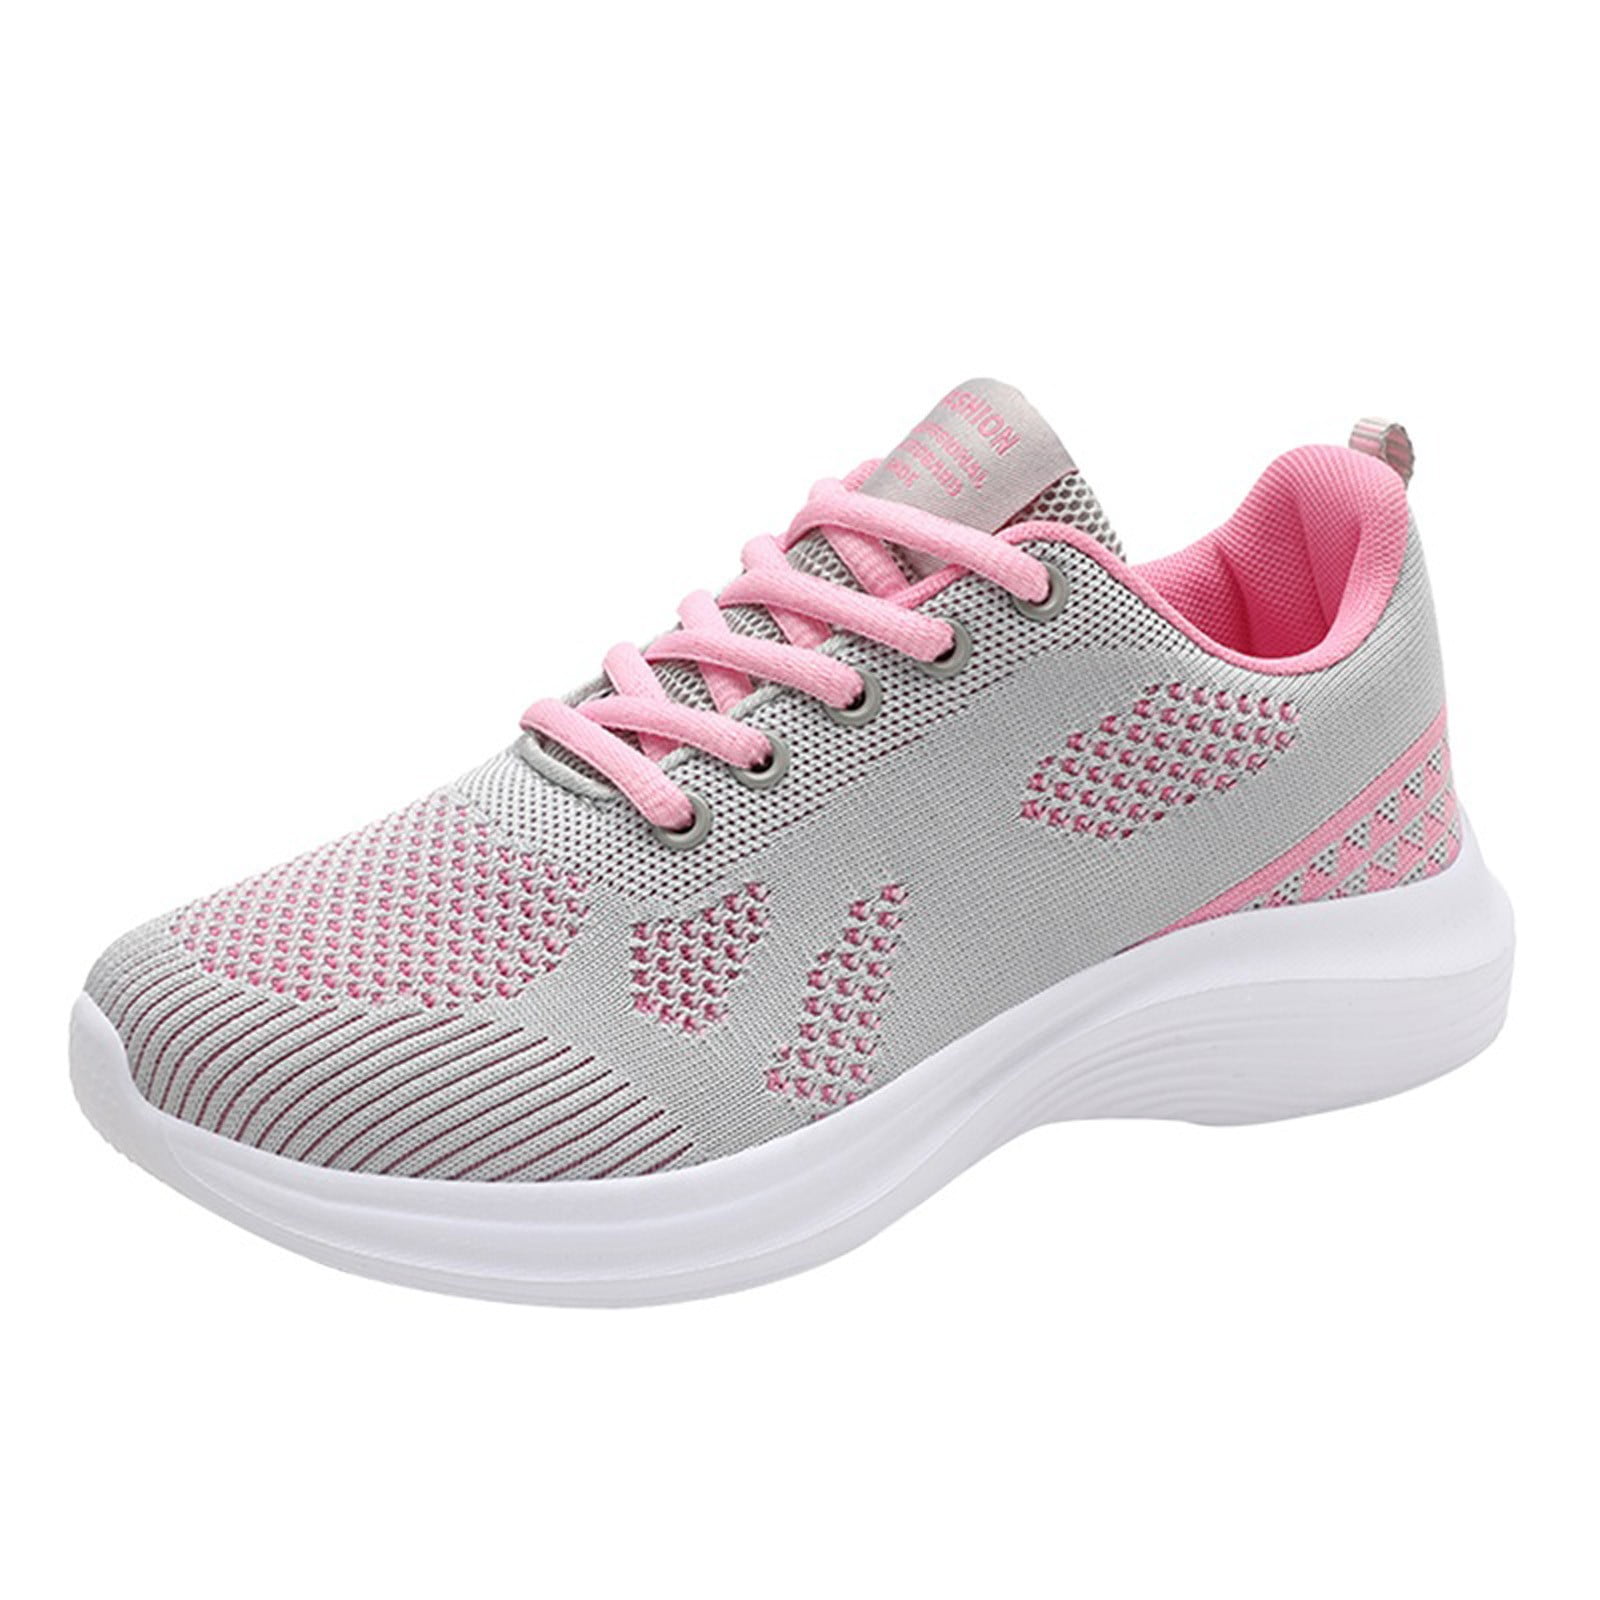 Qxutpo Sneakers for Women Running Casual Sports Shoes Mesh Non-Slip ...